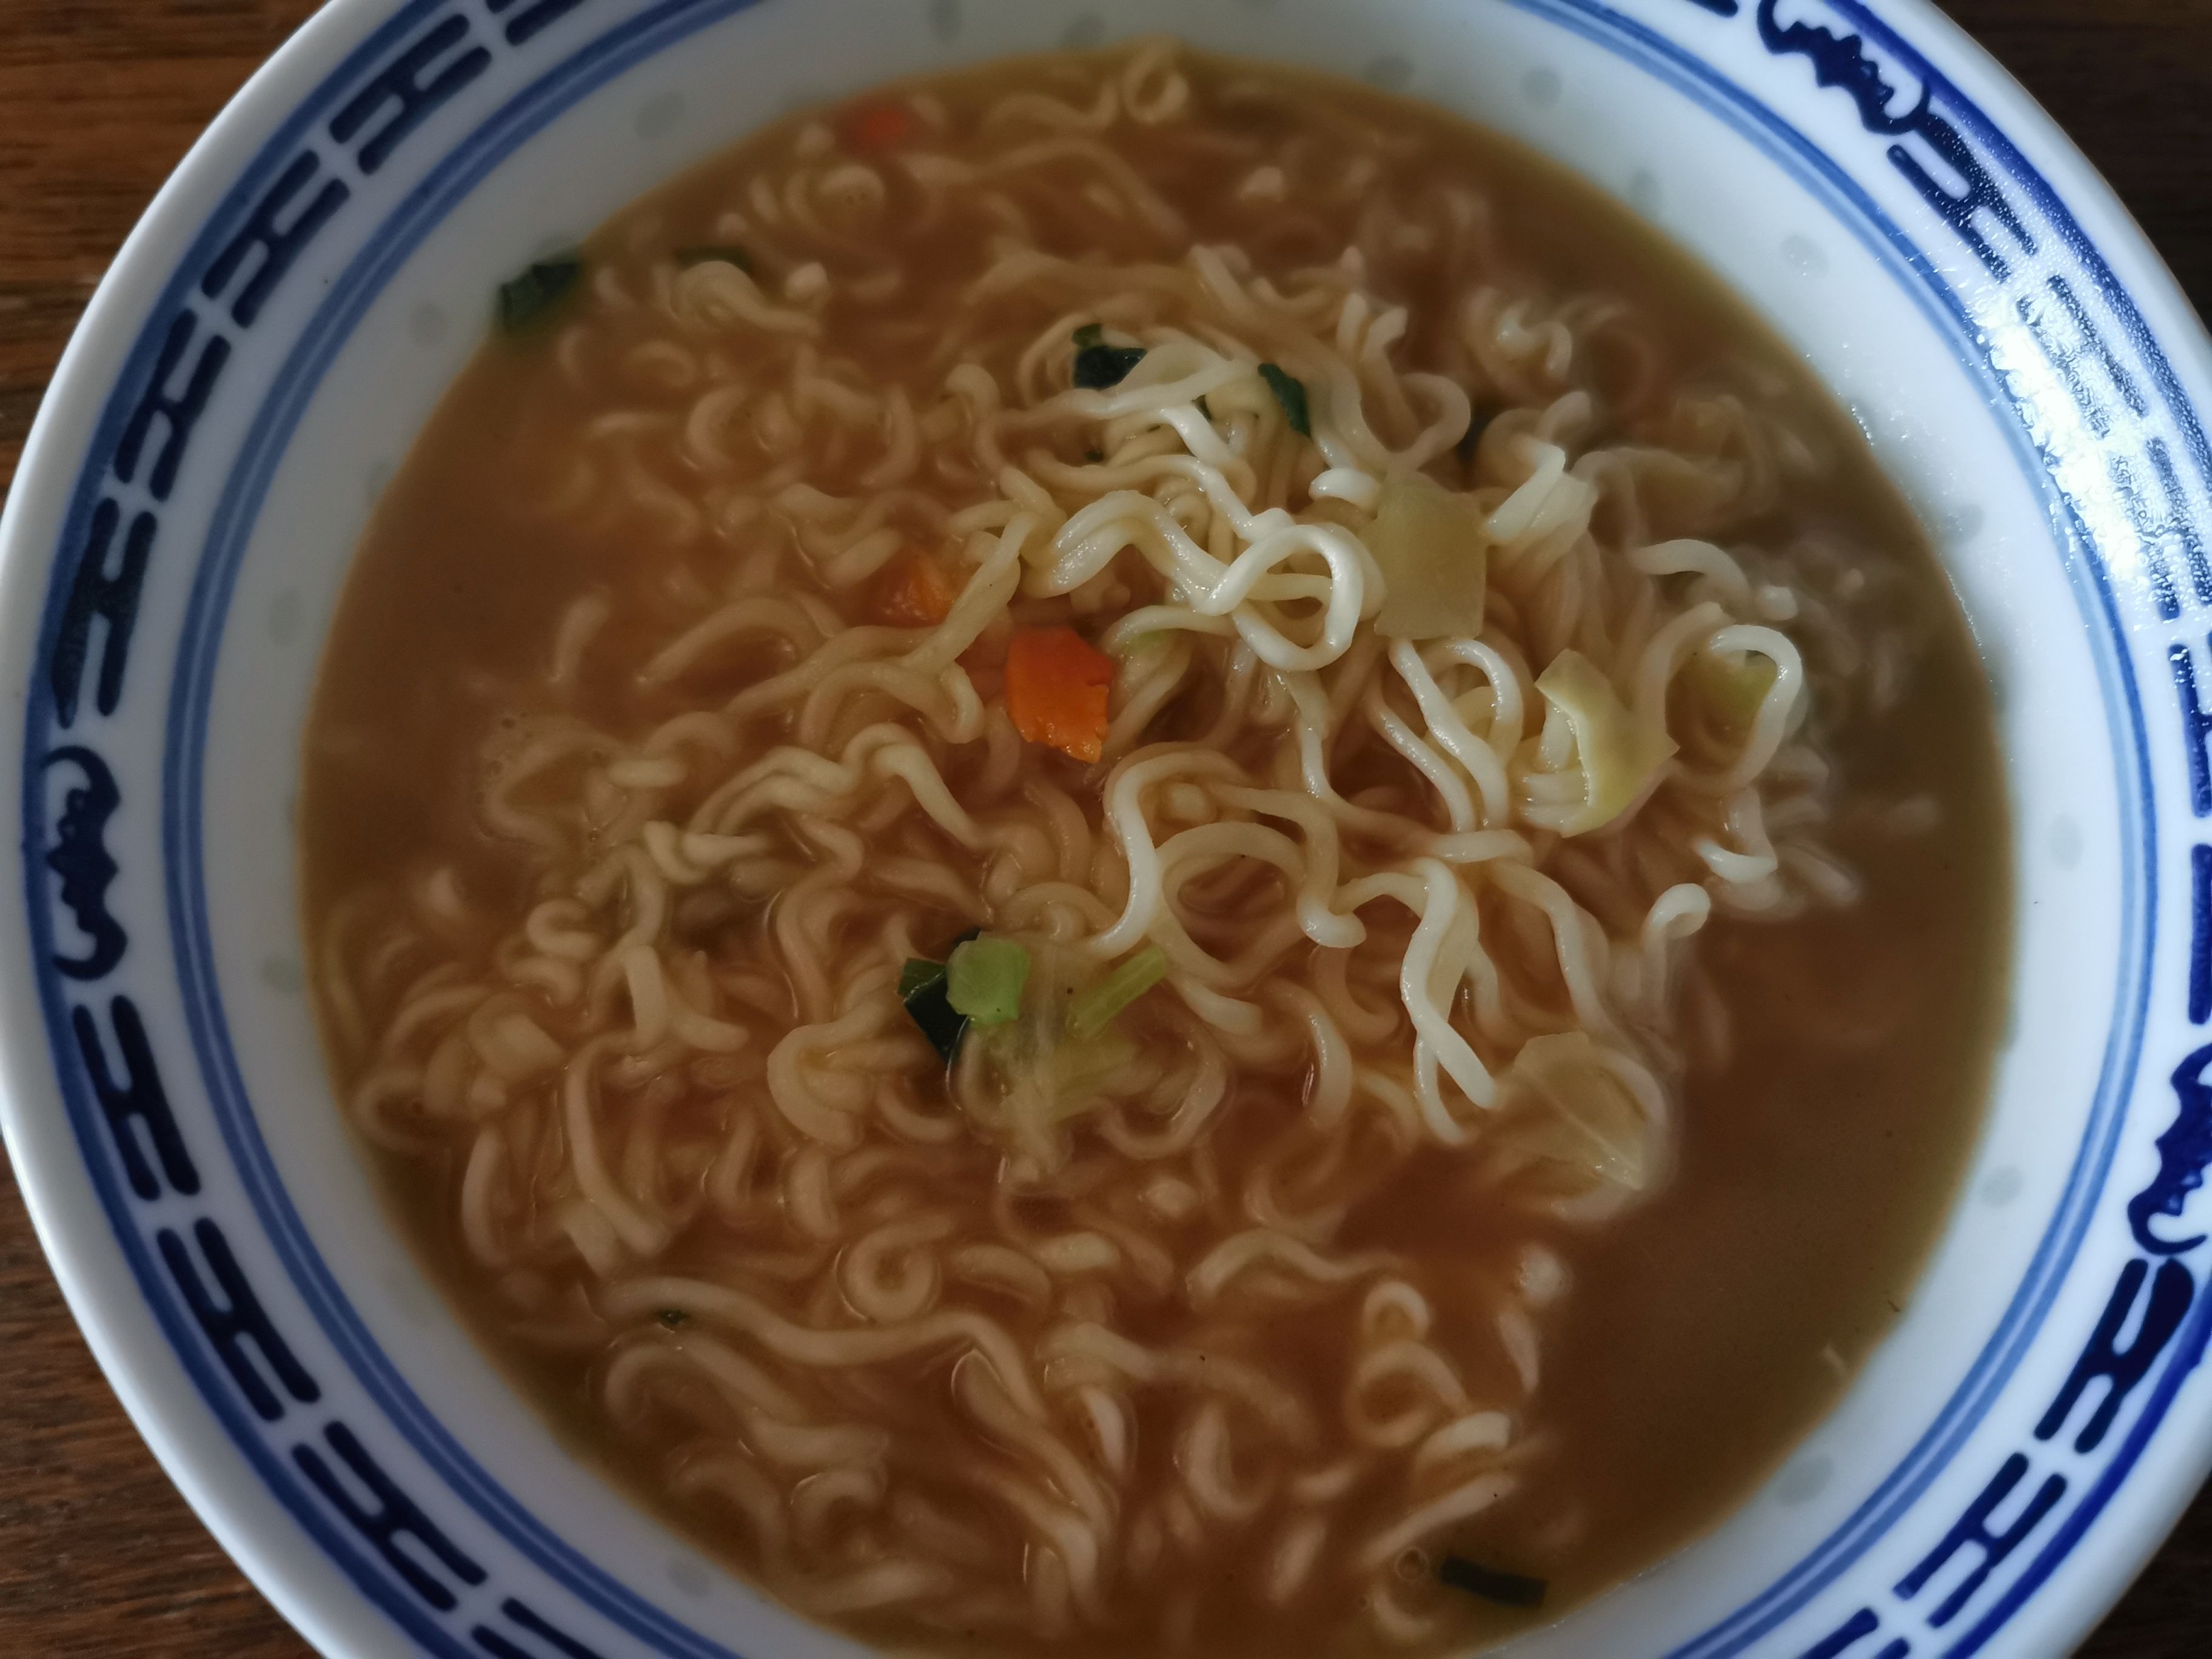 #2188: Baixiang "Artificial Chicken Soup Flavor Instant Noodles"